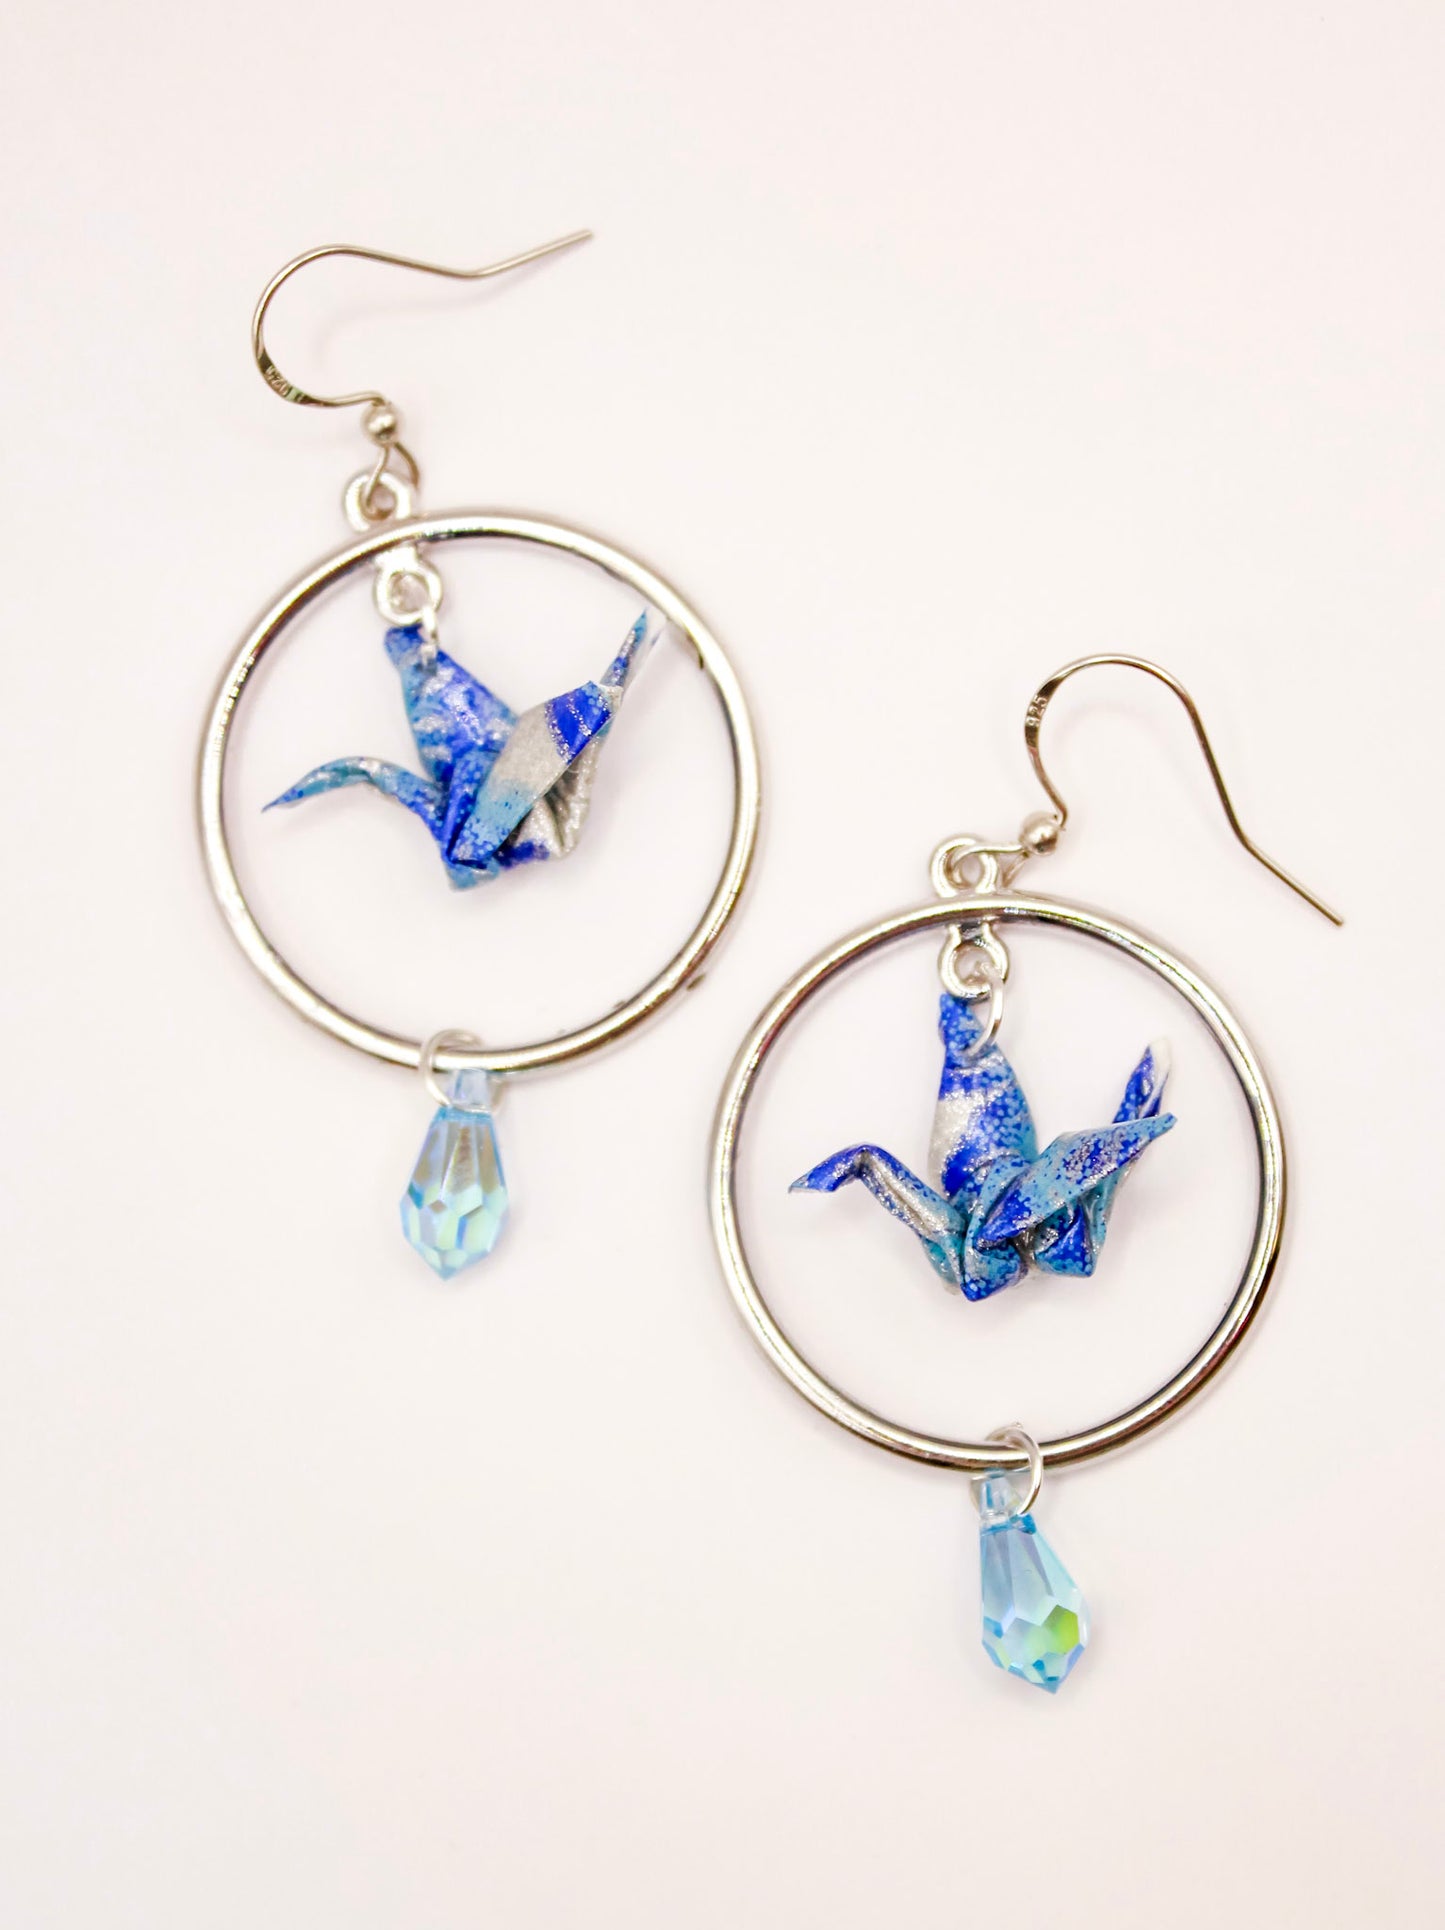 Celestial Serenity Jewellery - Origami Crane Bundle